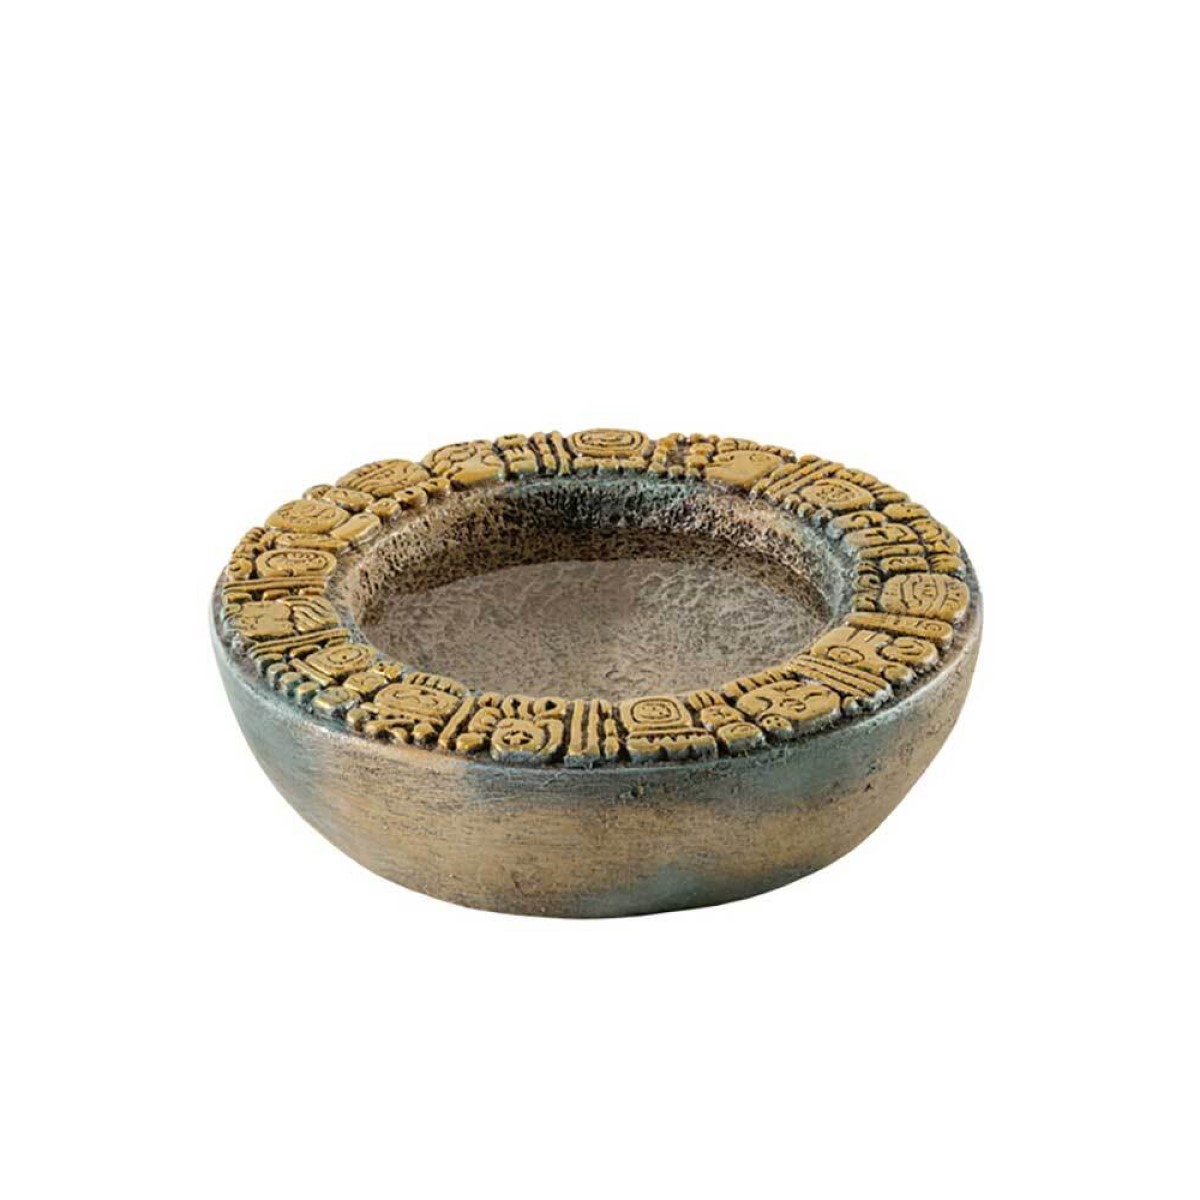 Tigela de água azteca Exo Terra Water Dish - 2 tamanhos disponíveis